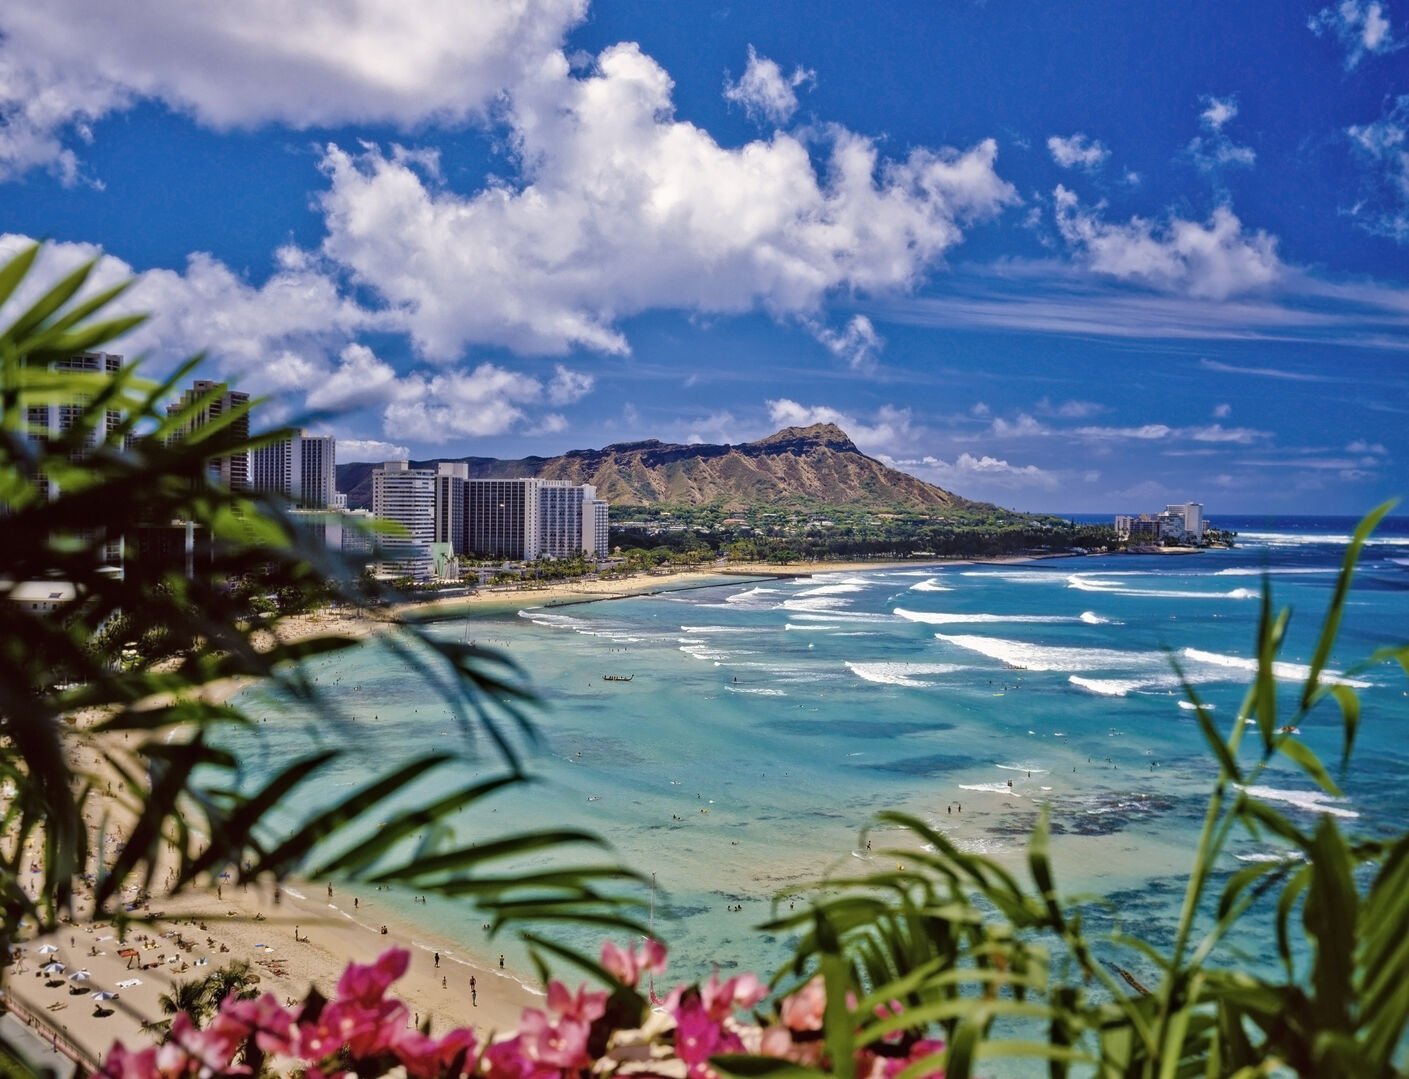 Waikiki Beach and Diamond Head in the background